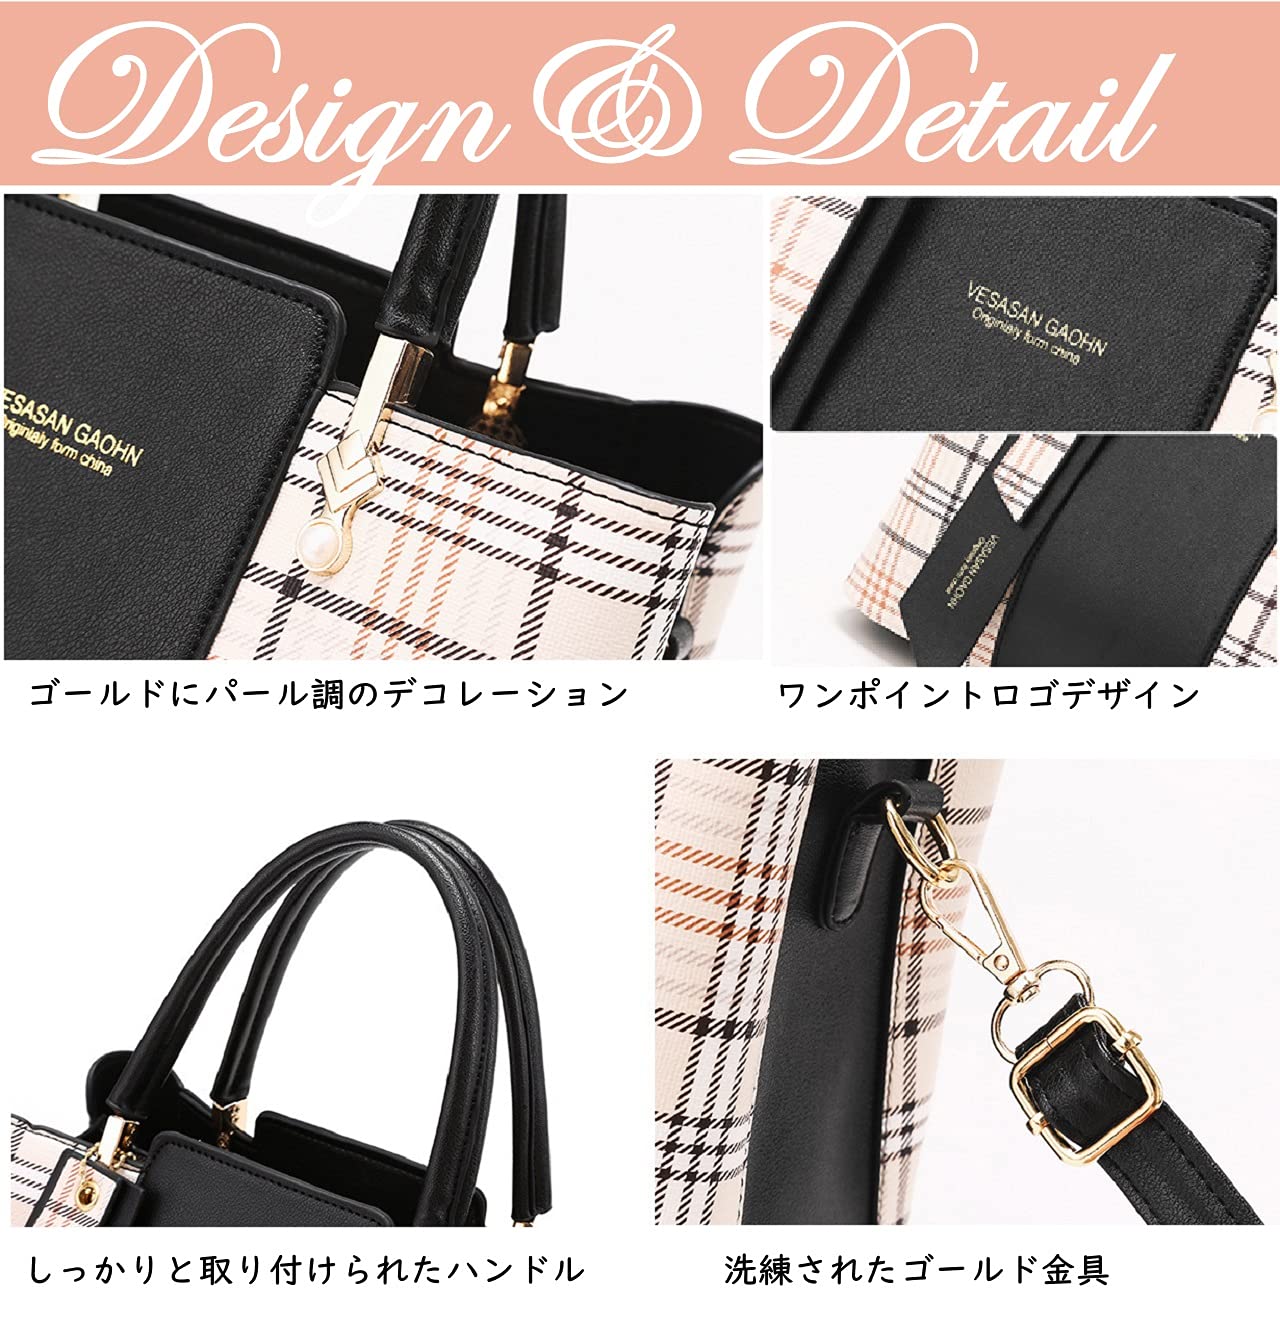 Brightrust Women's Handbag, 2-Way Shoulder Bag, Crossbody Design, Plaid, PU Leather